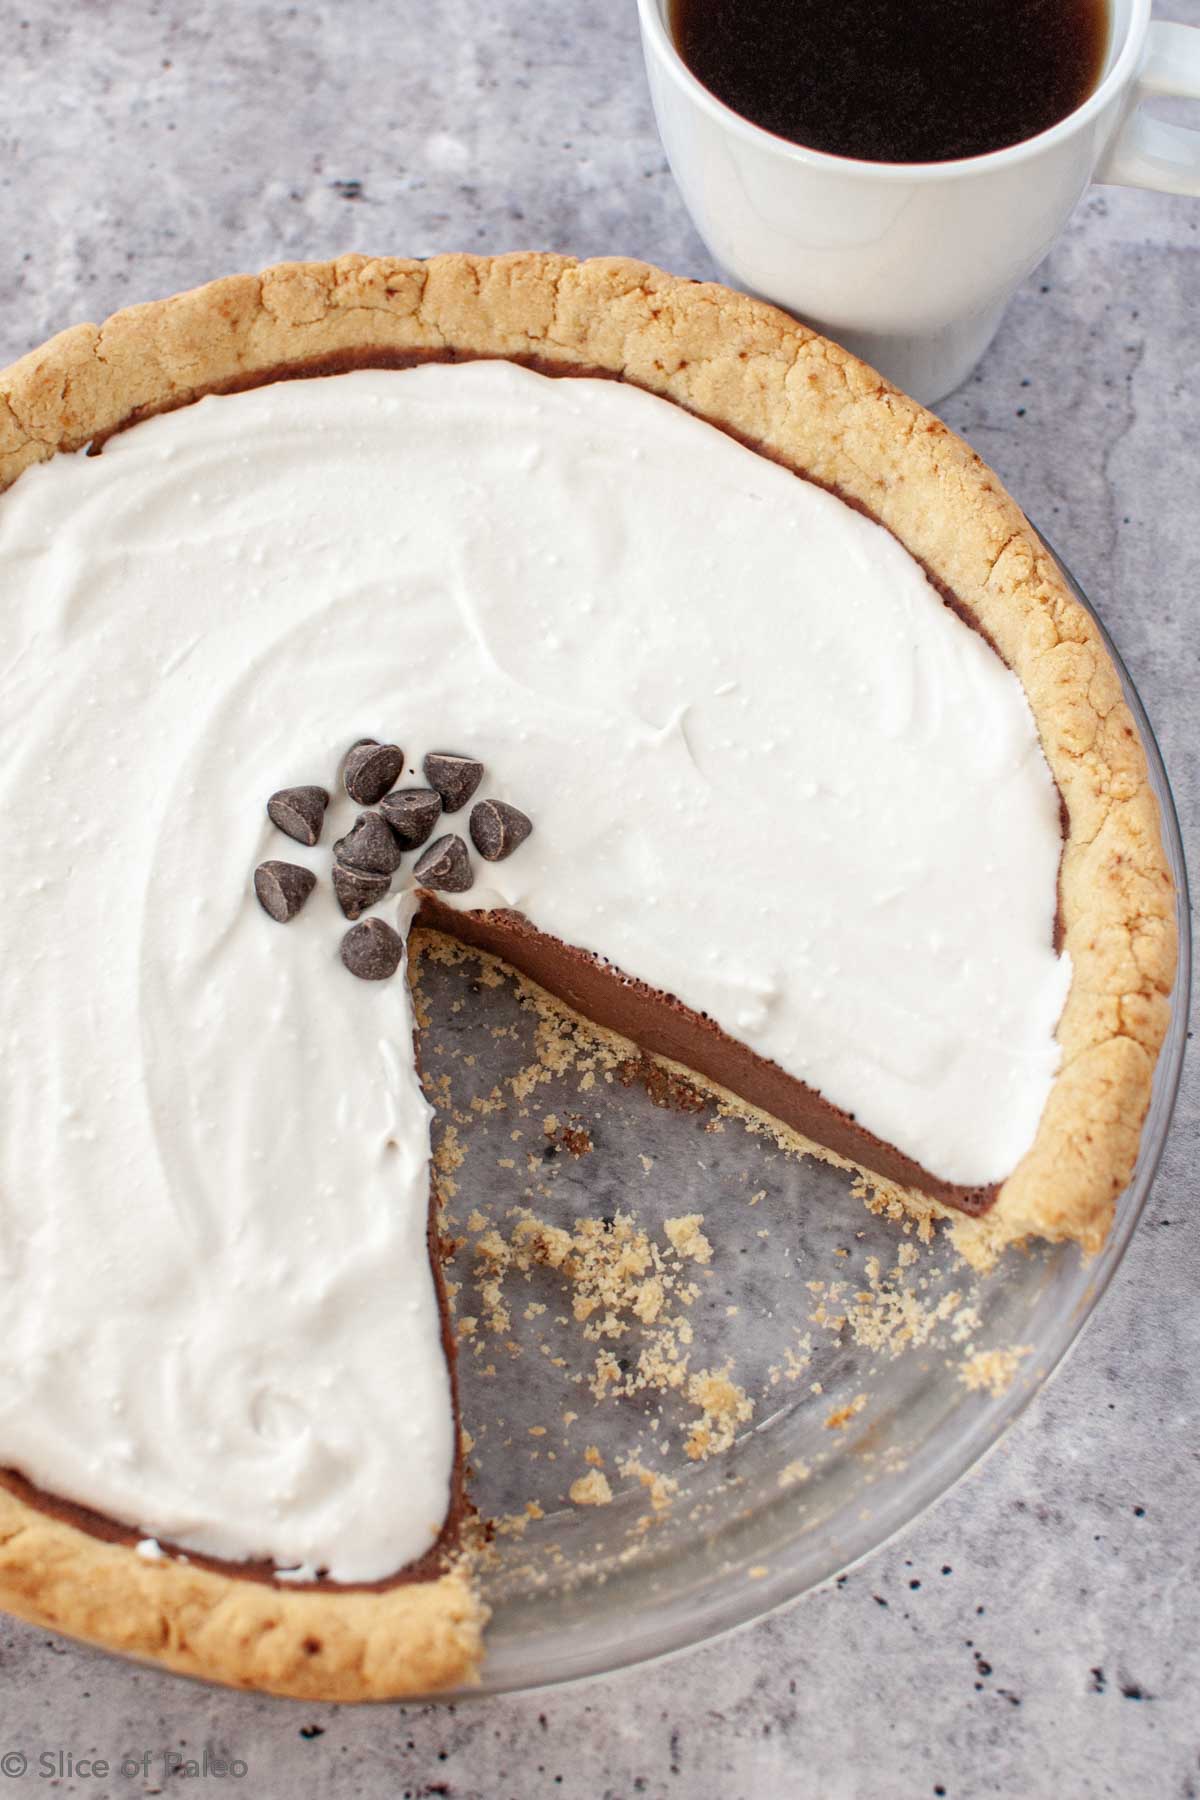 Paleo Chocolate Cream Pie with whipped cream on top